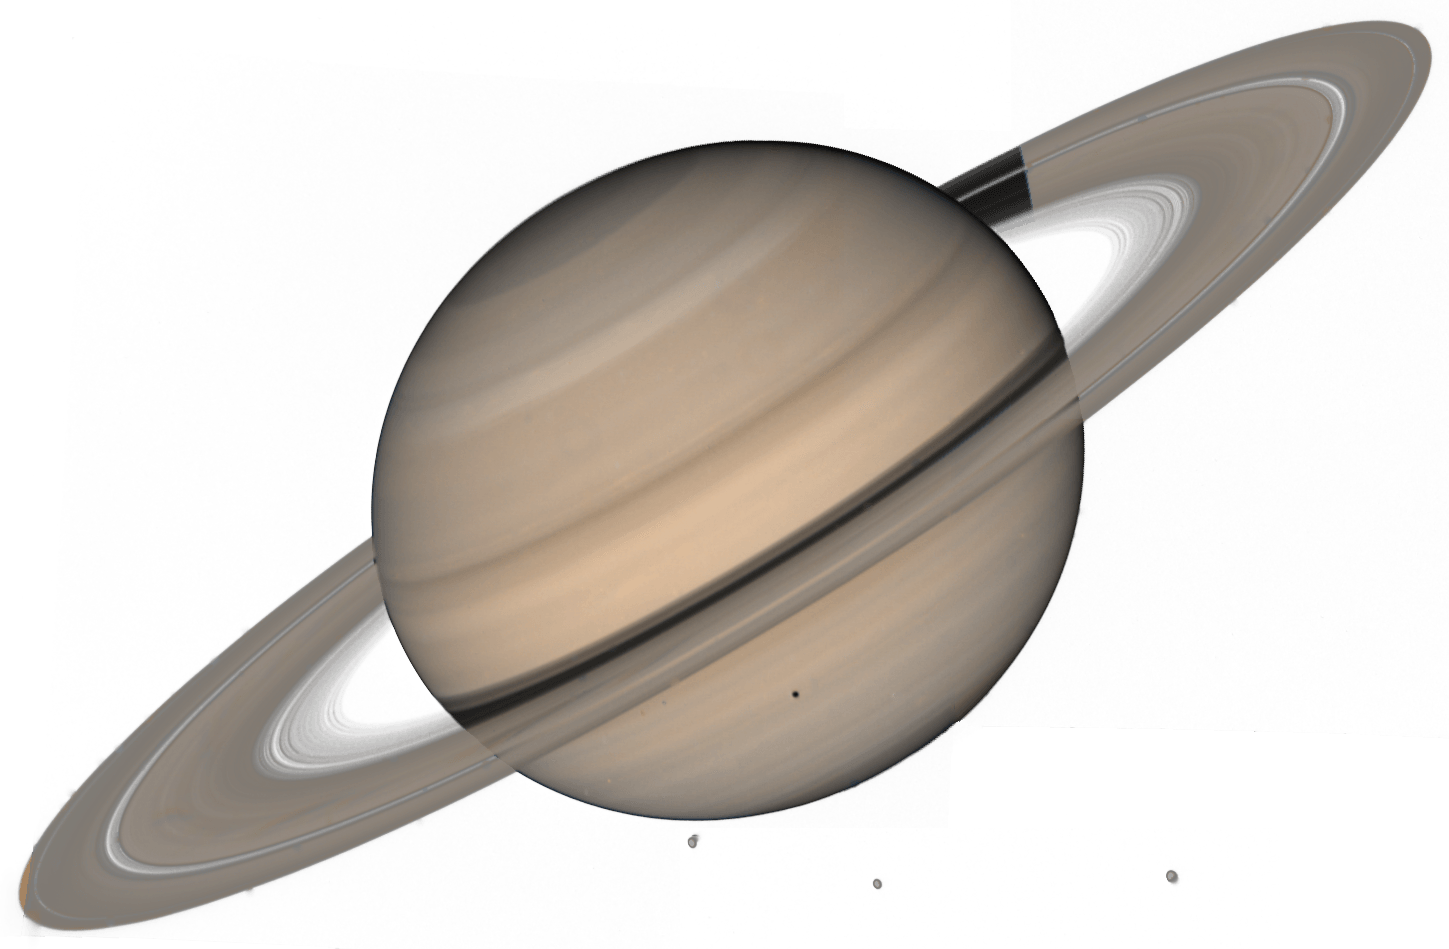 Tamil Astronomy Saturn